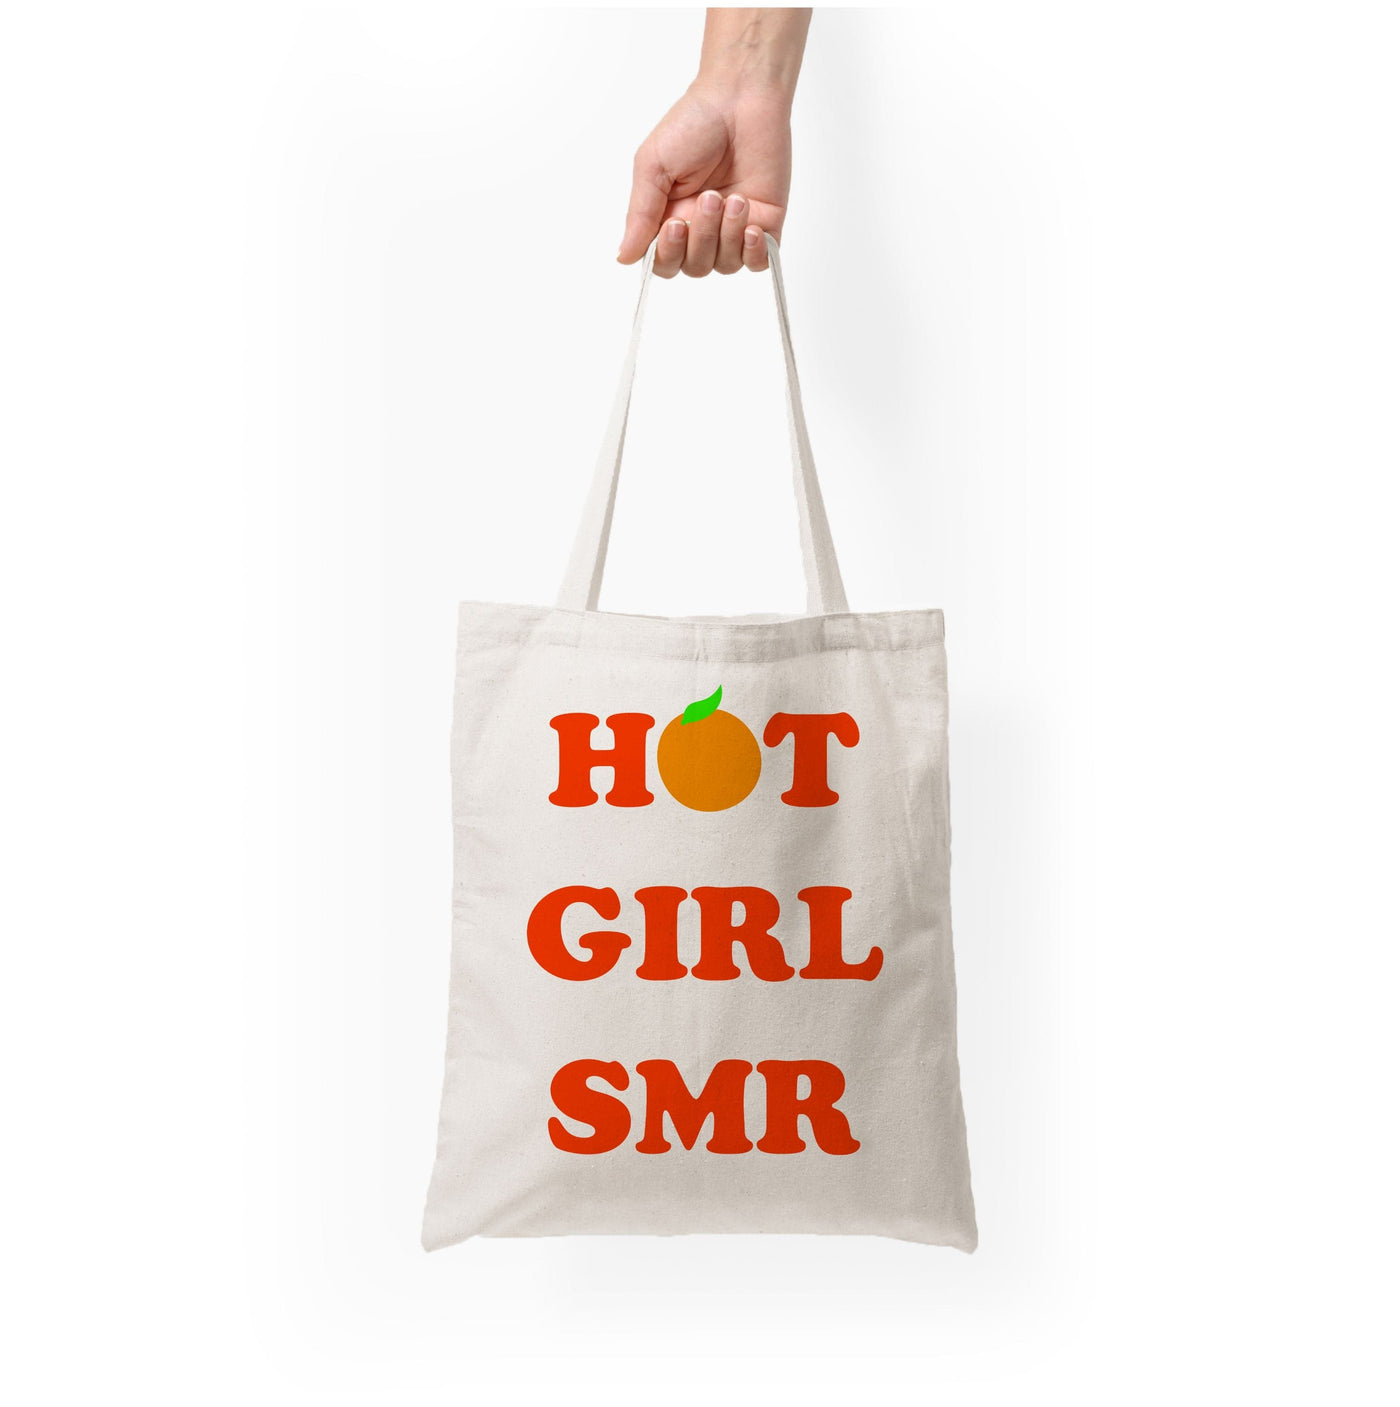 Hot Girl SMR - Summer Tote Bag